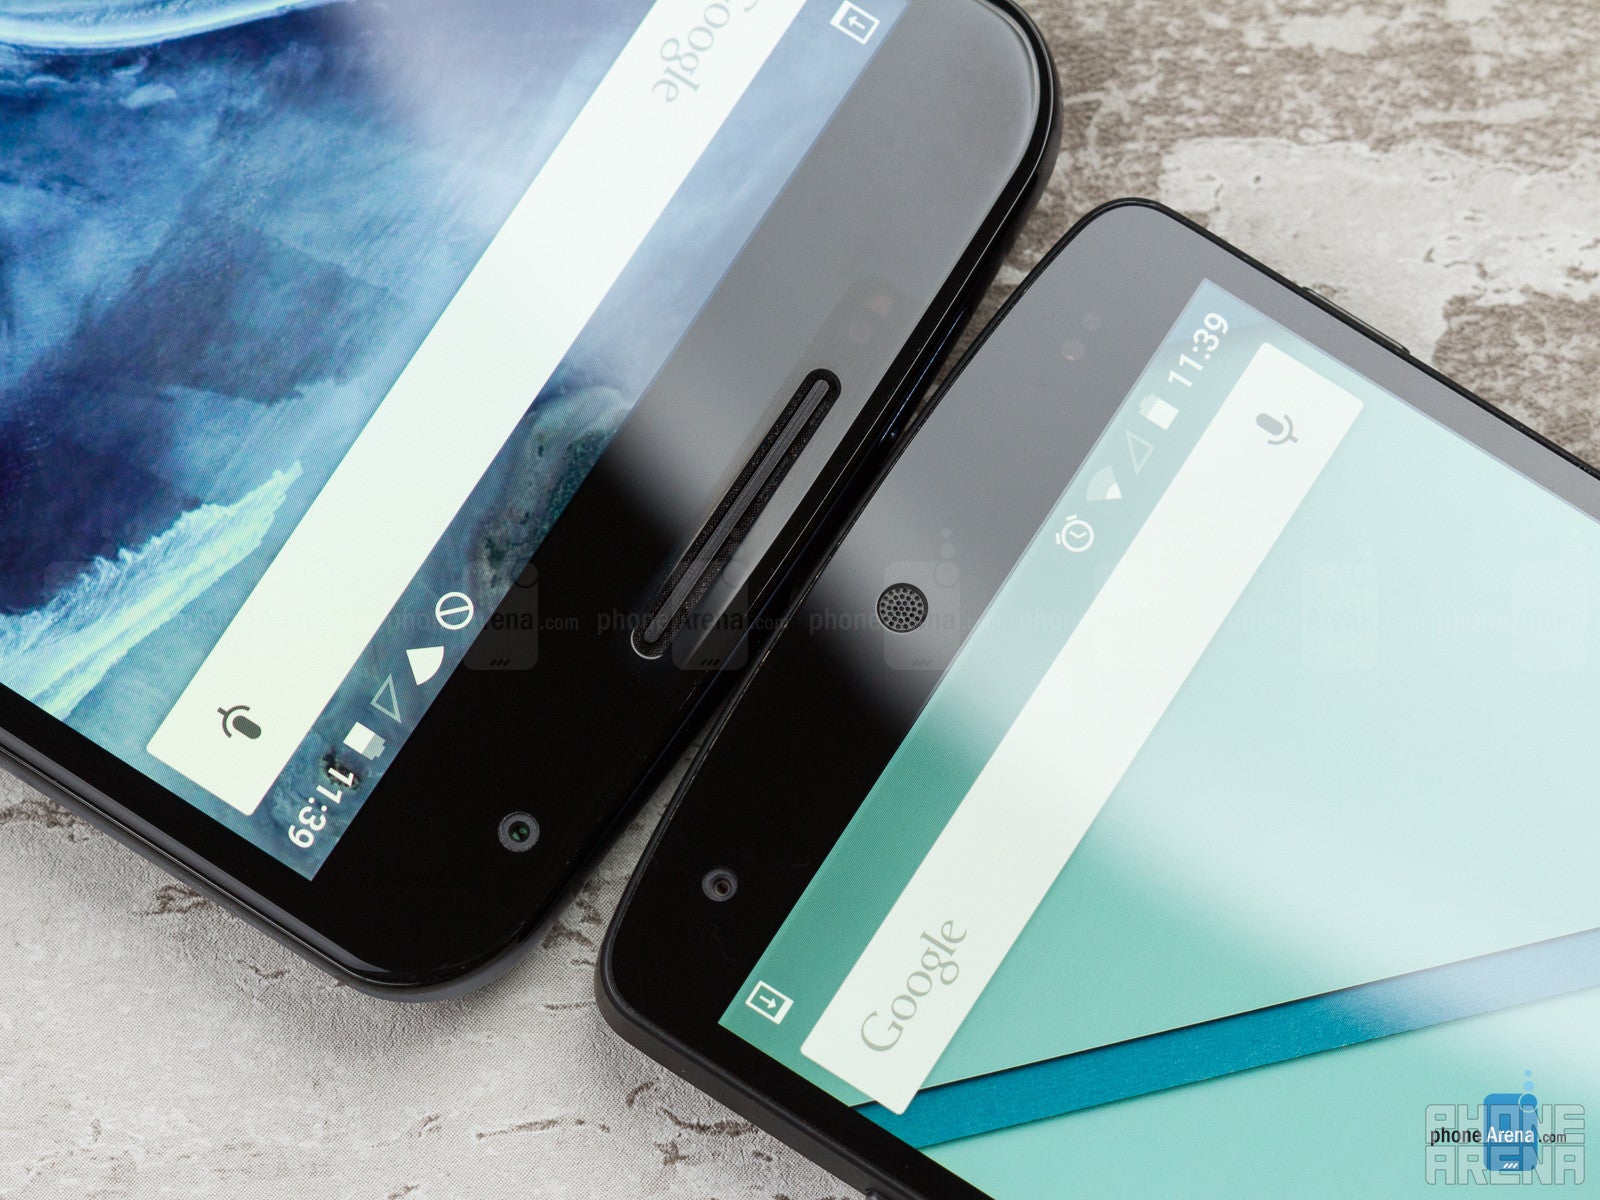 Google Nexus 6 vs Google Nexus 5